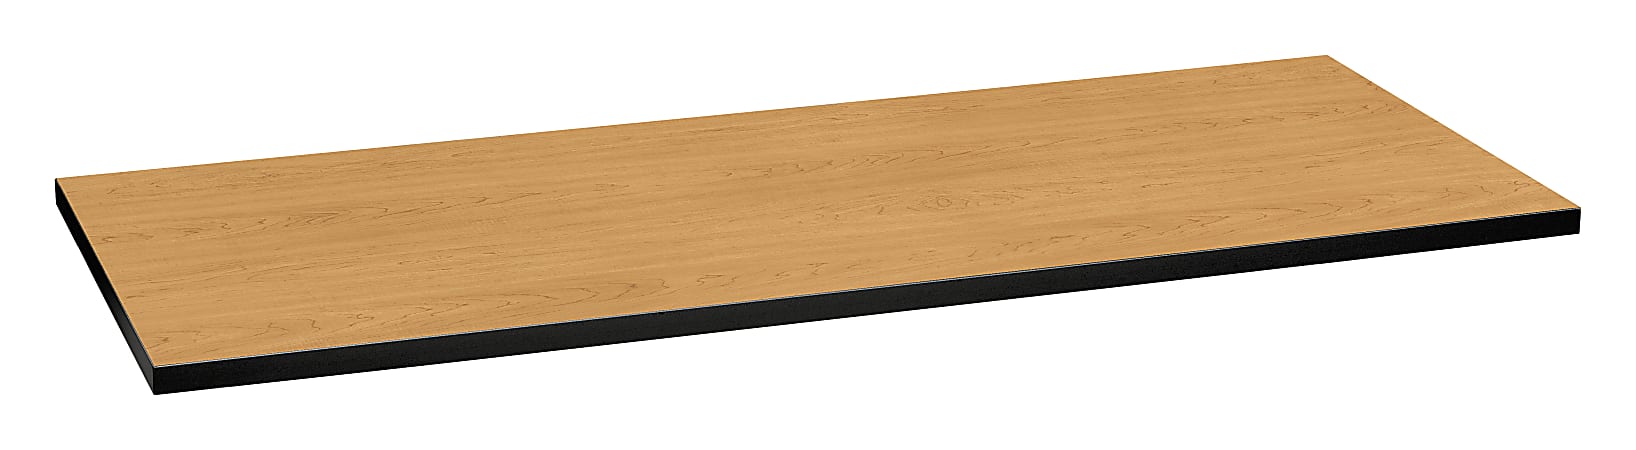 HON Huddles Series™ Multipurpose Table Top, 60"W x 24"D, Harvest/Black